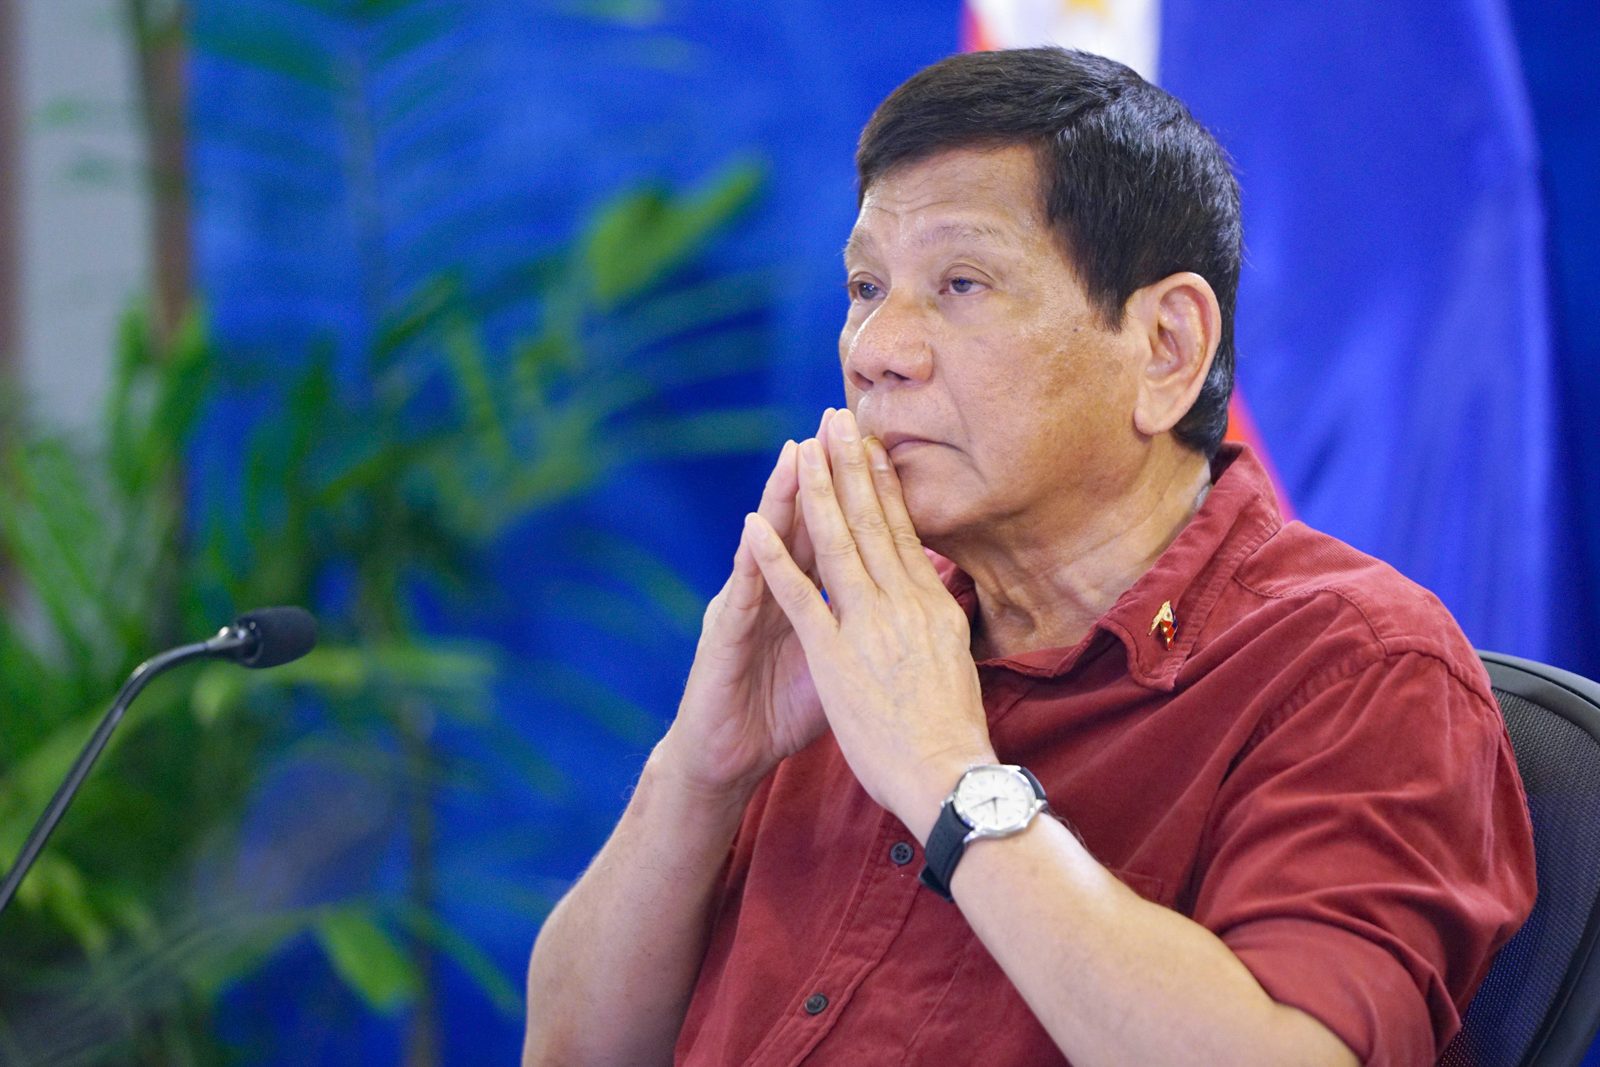 After announcing ‘retirement,’ Duterte now eyes Senate seat